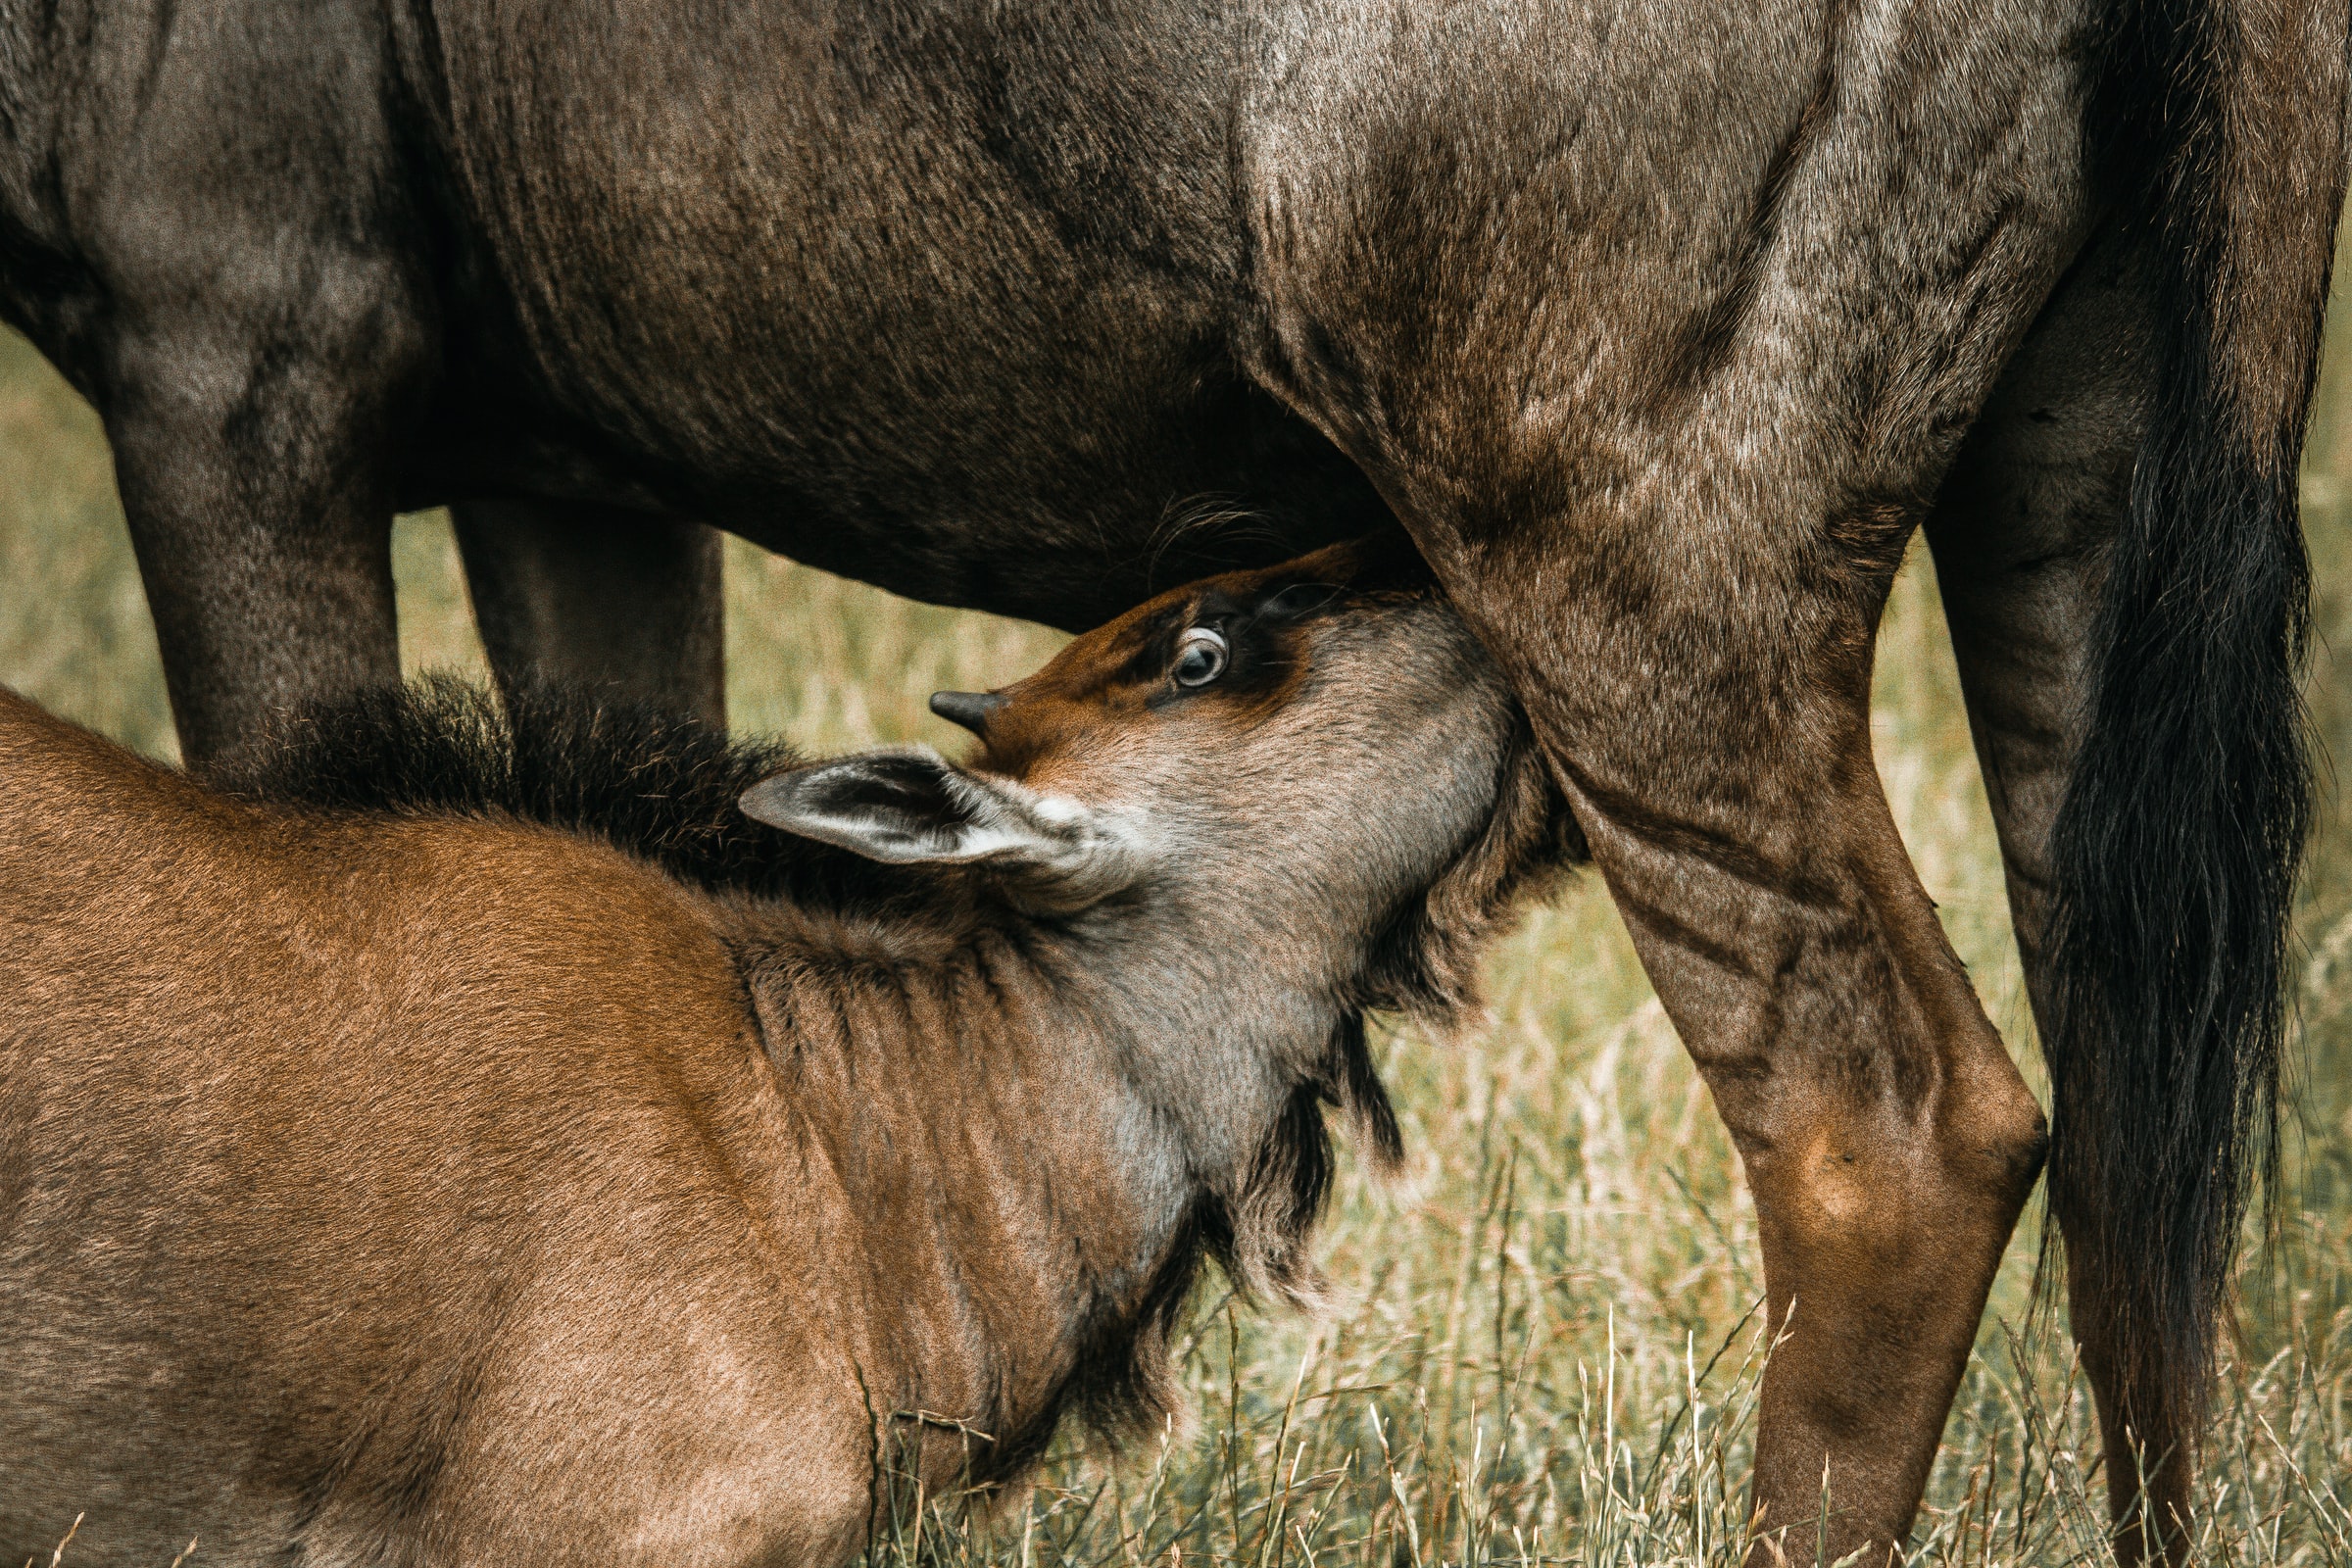 Wildebeest calving season, the best time